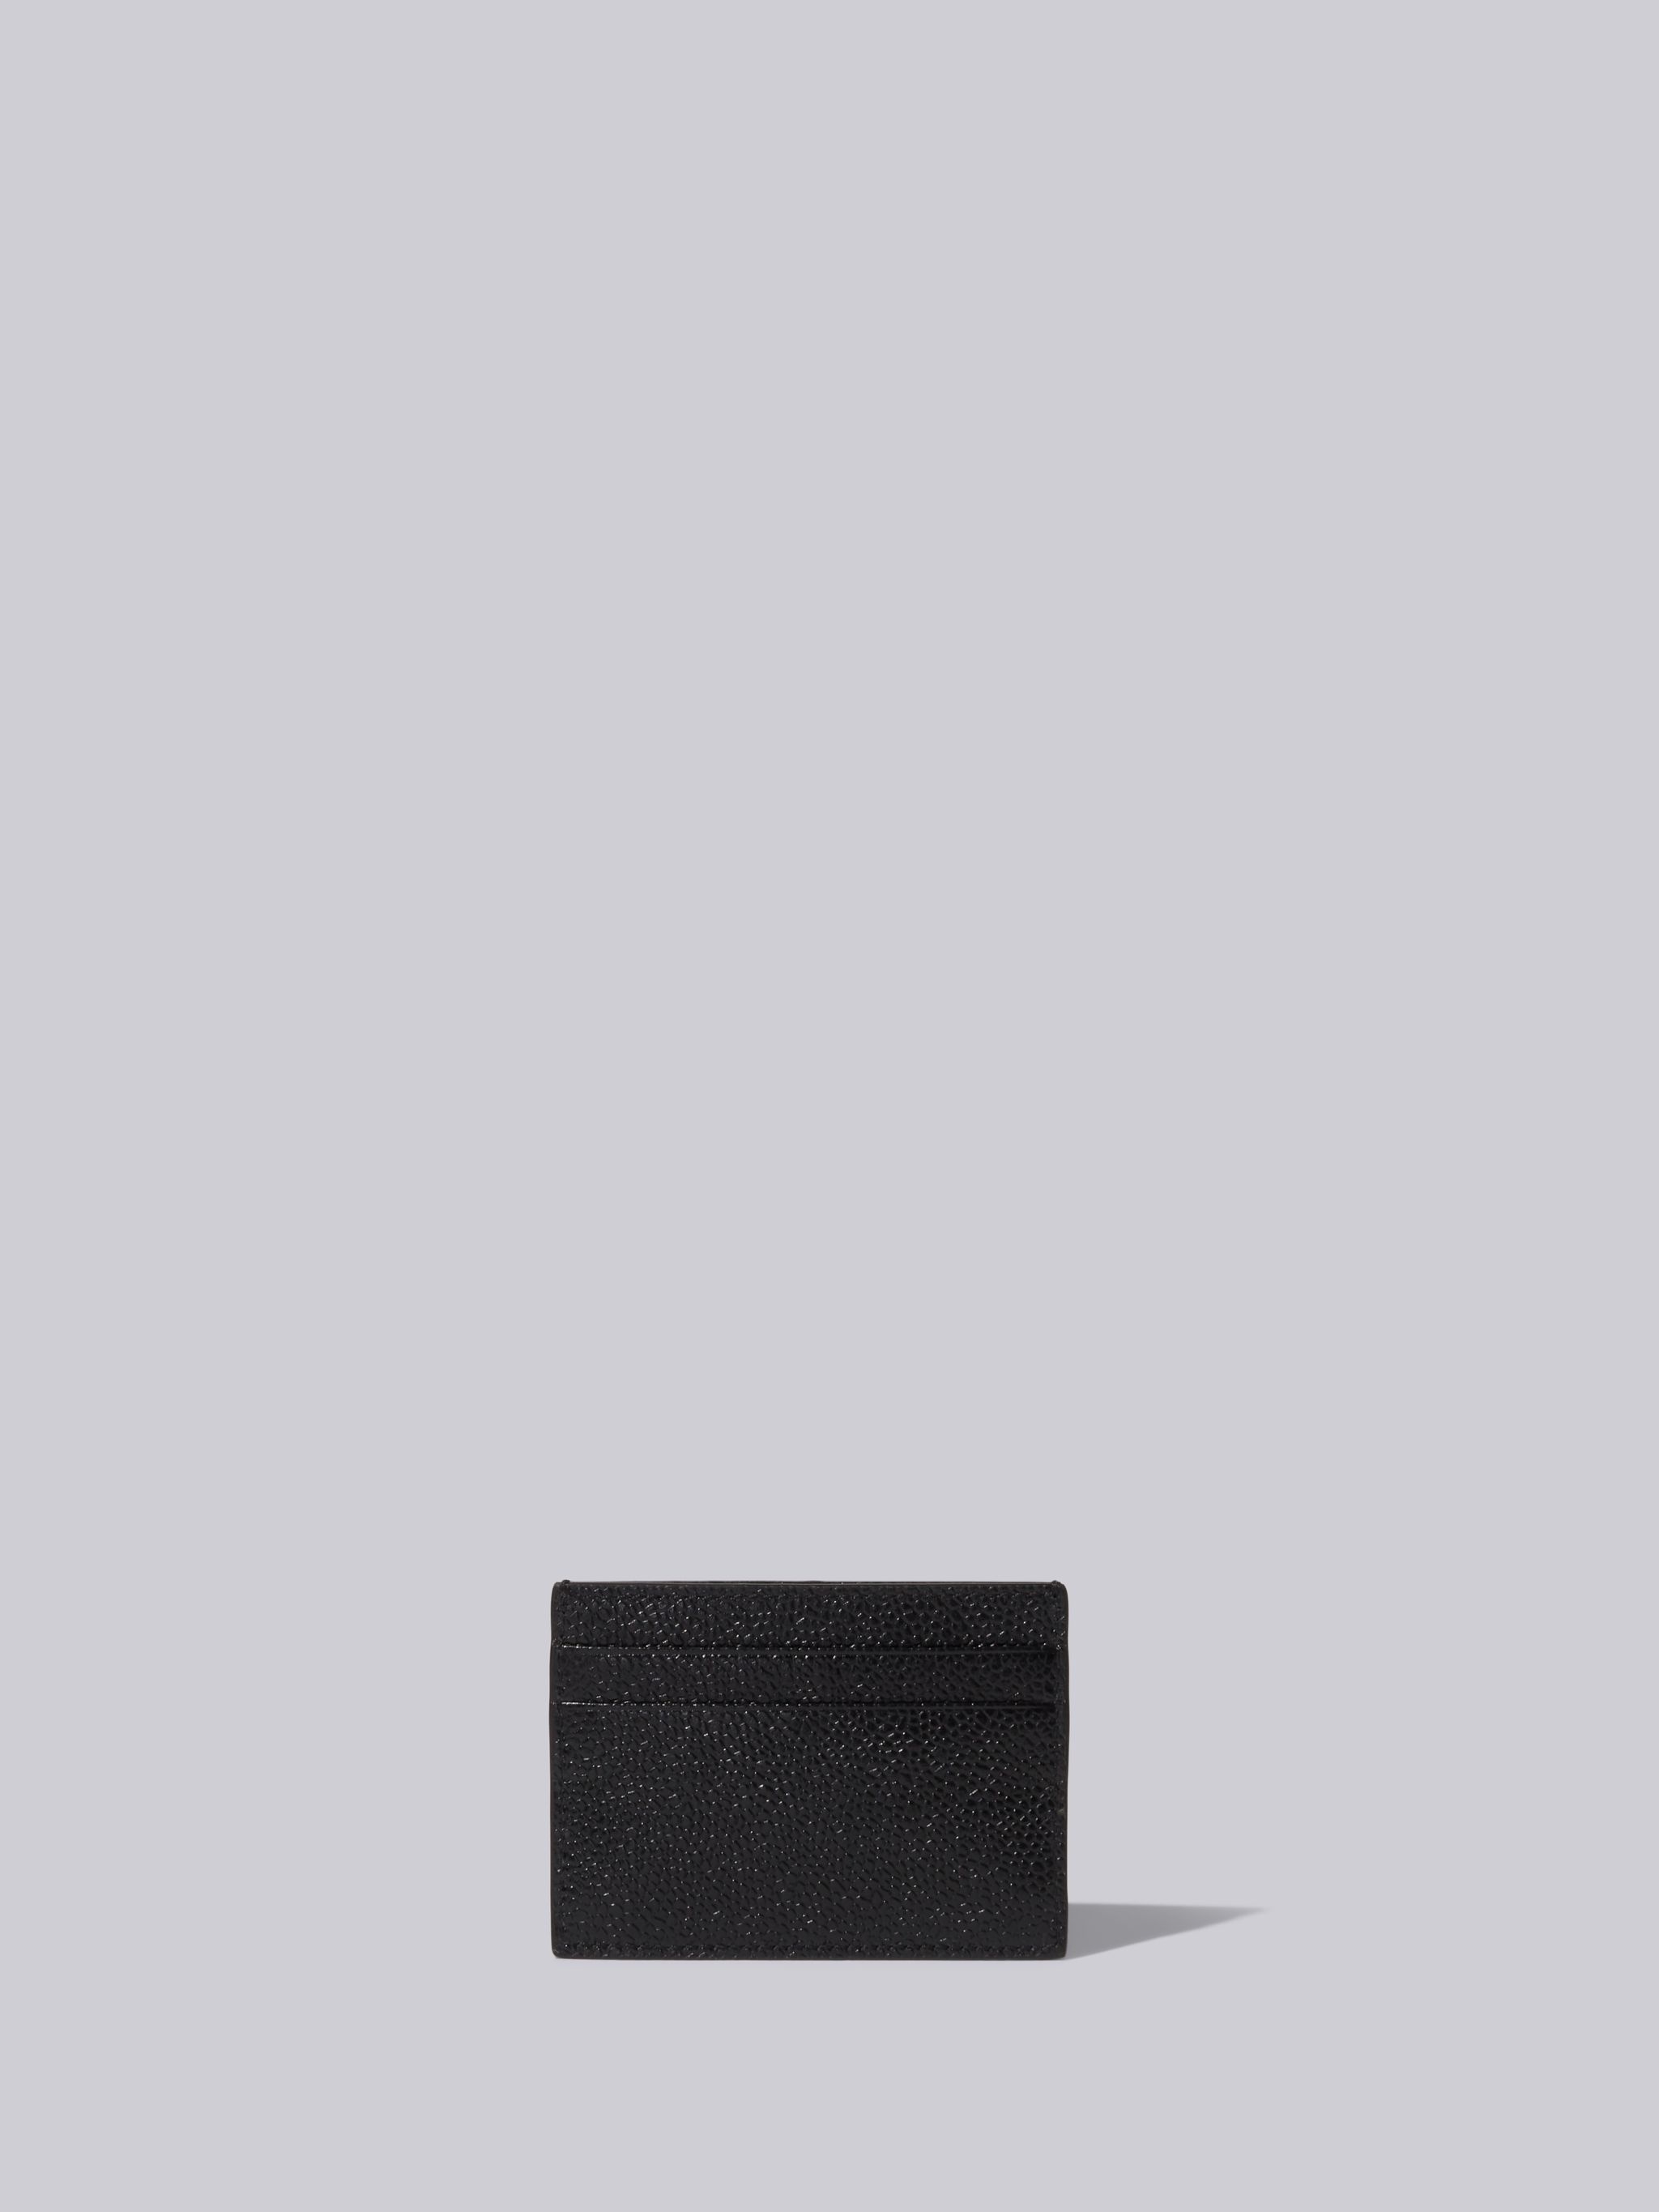 Black Pebble Grain Leather Grosgrain Tab Double Sided Card Holder - 4